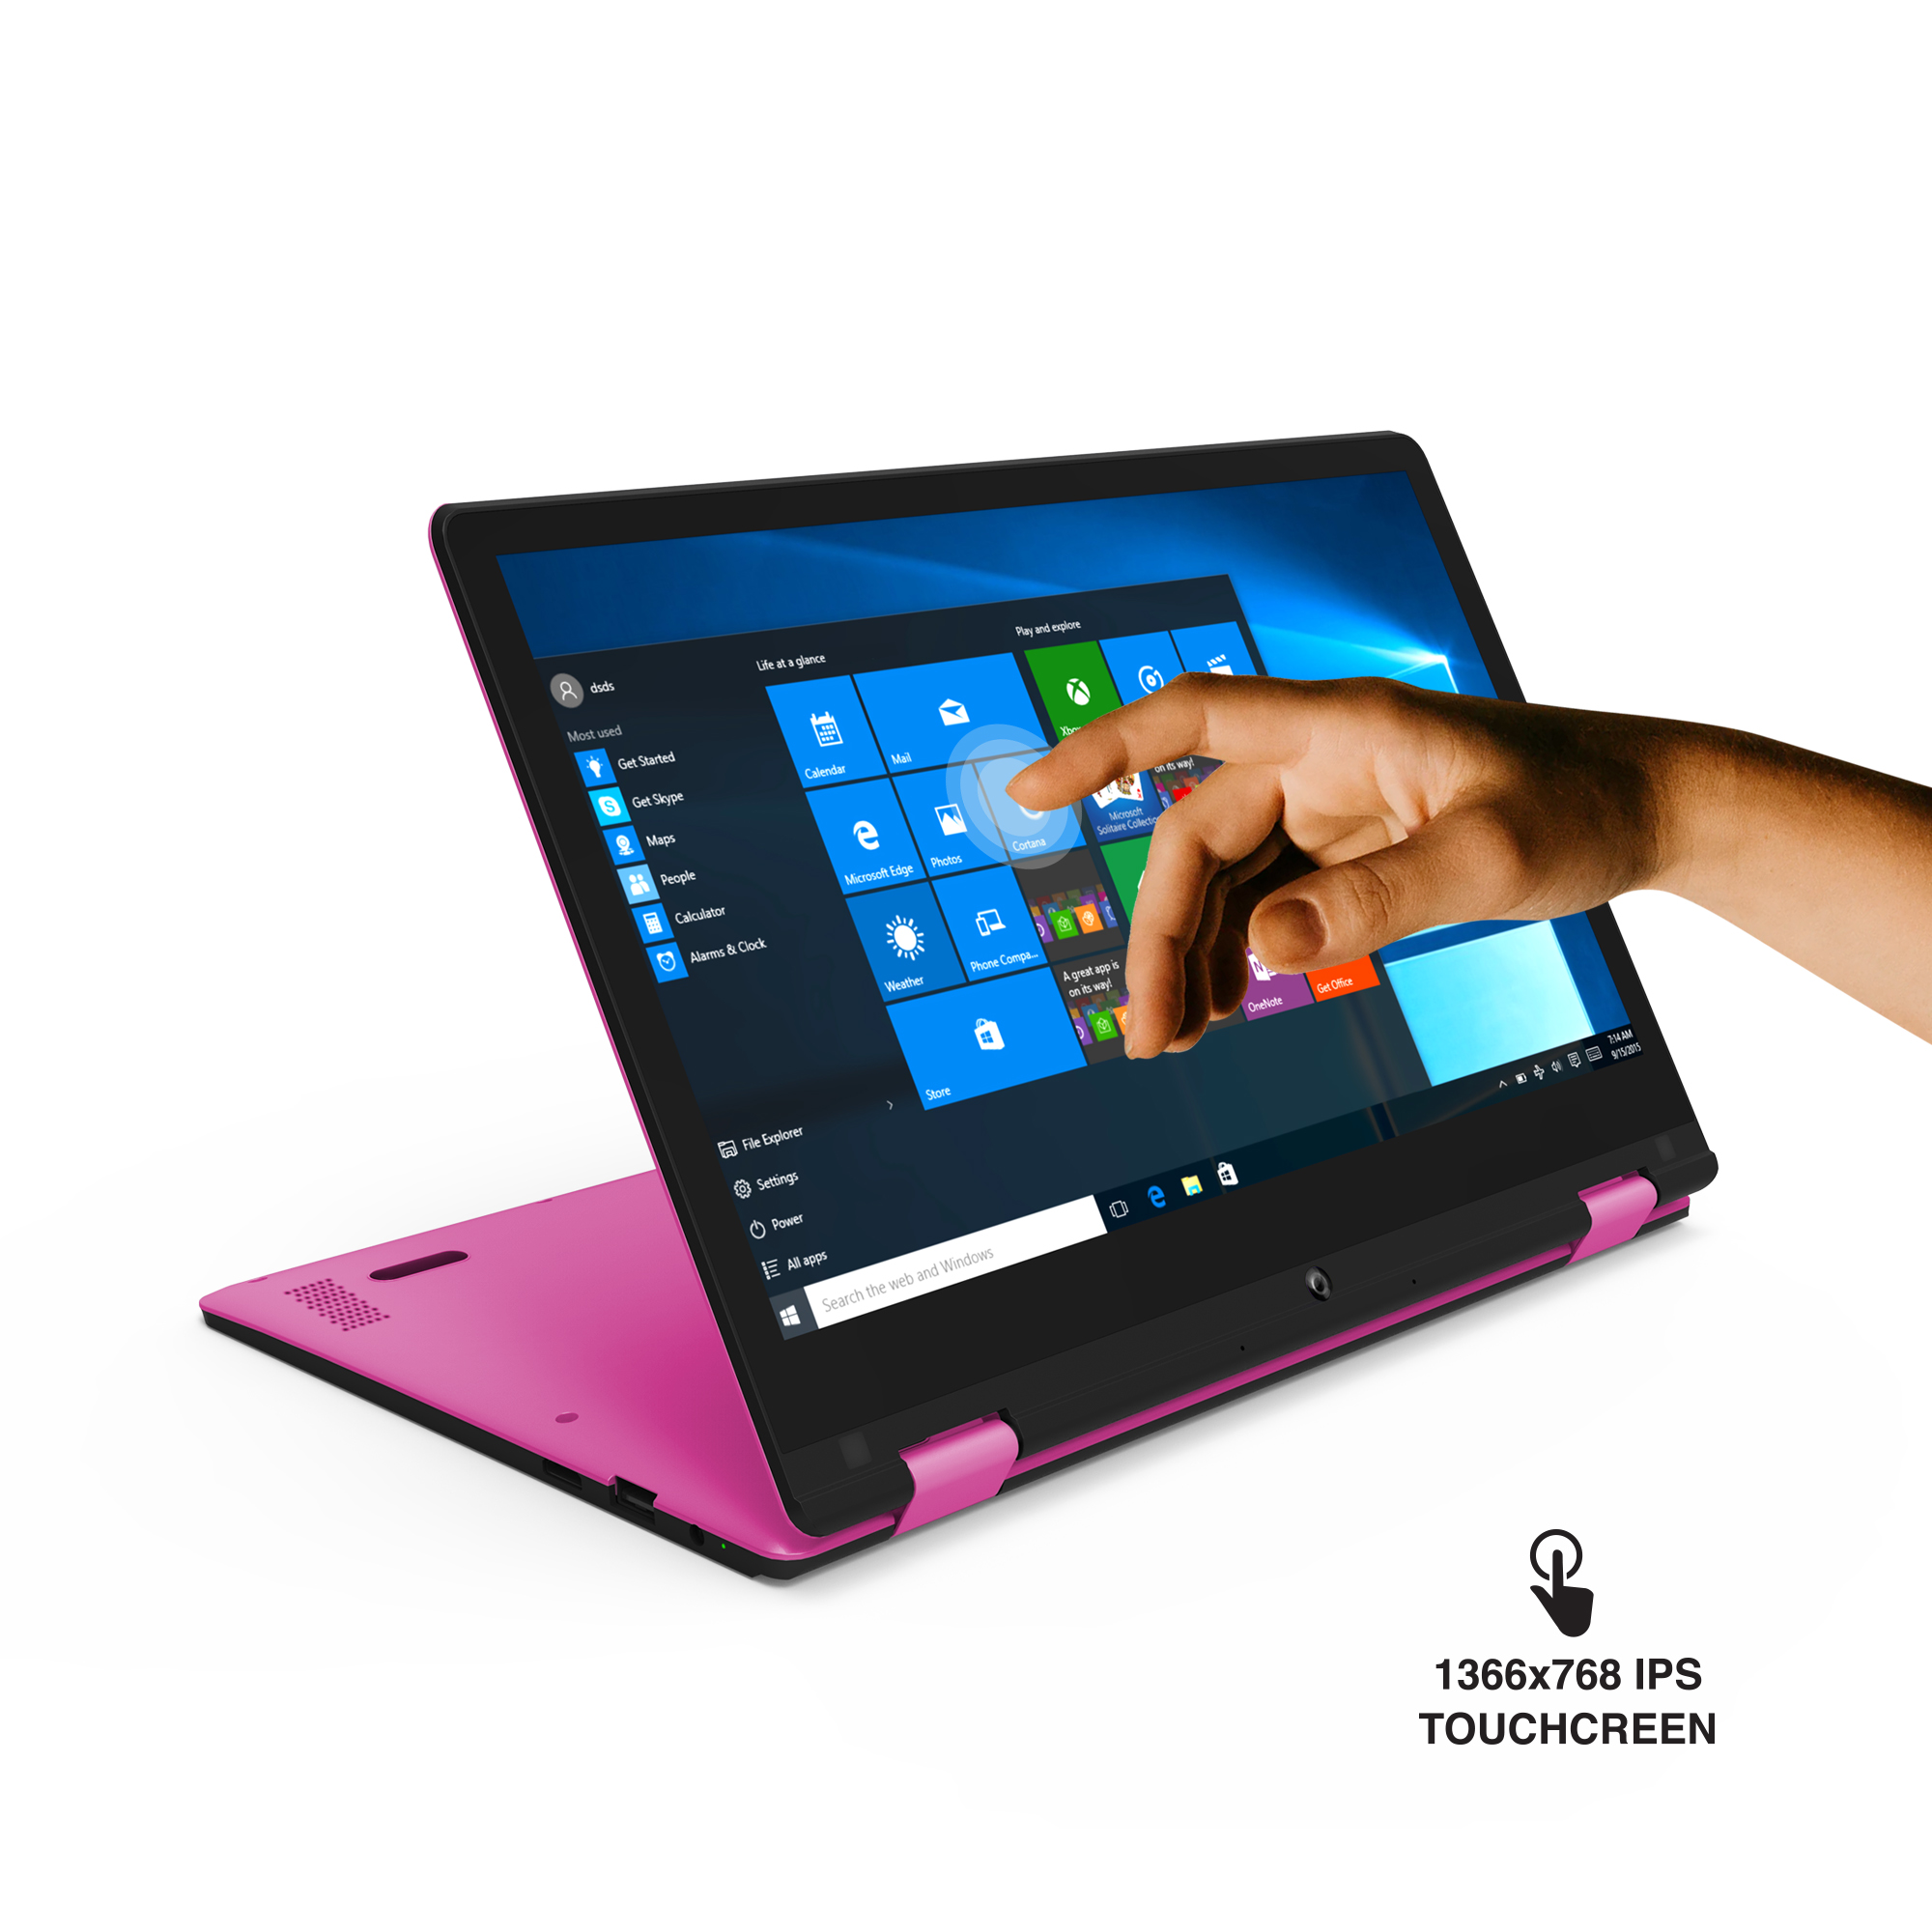 Core Innovations 11.6" 720p Touchscreen Laptop, Intel Celeron N3350, 4GB RAM, 64GB HD, Windows 10, Pink, CLT1164PN - image 4 of 11